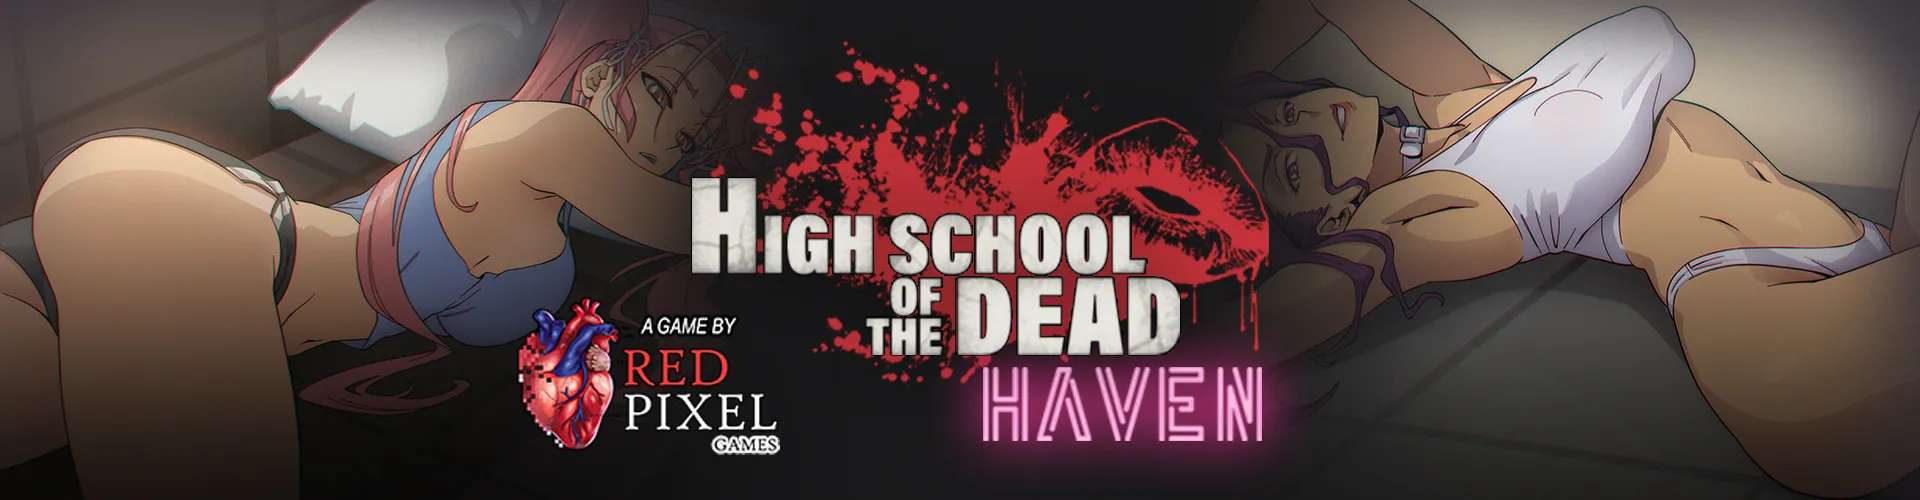 Highschool of the Dead: Haven v1.0 HG1000057 main